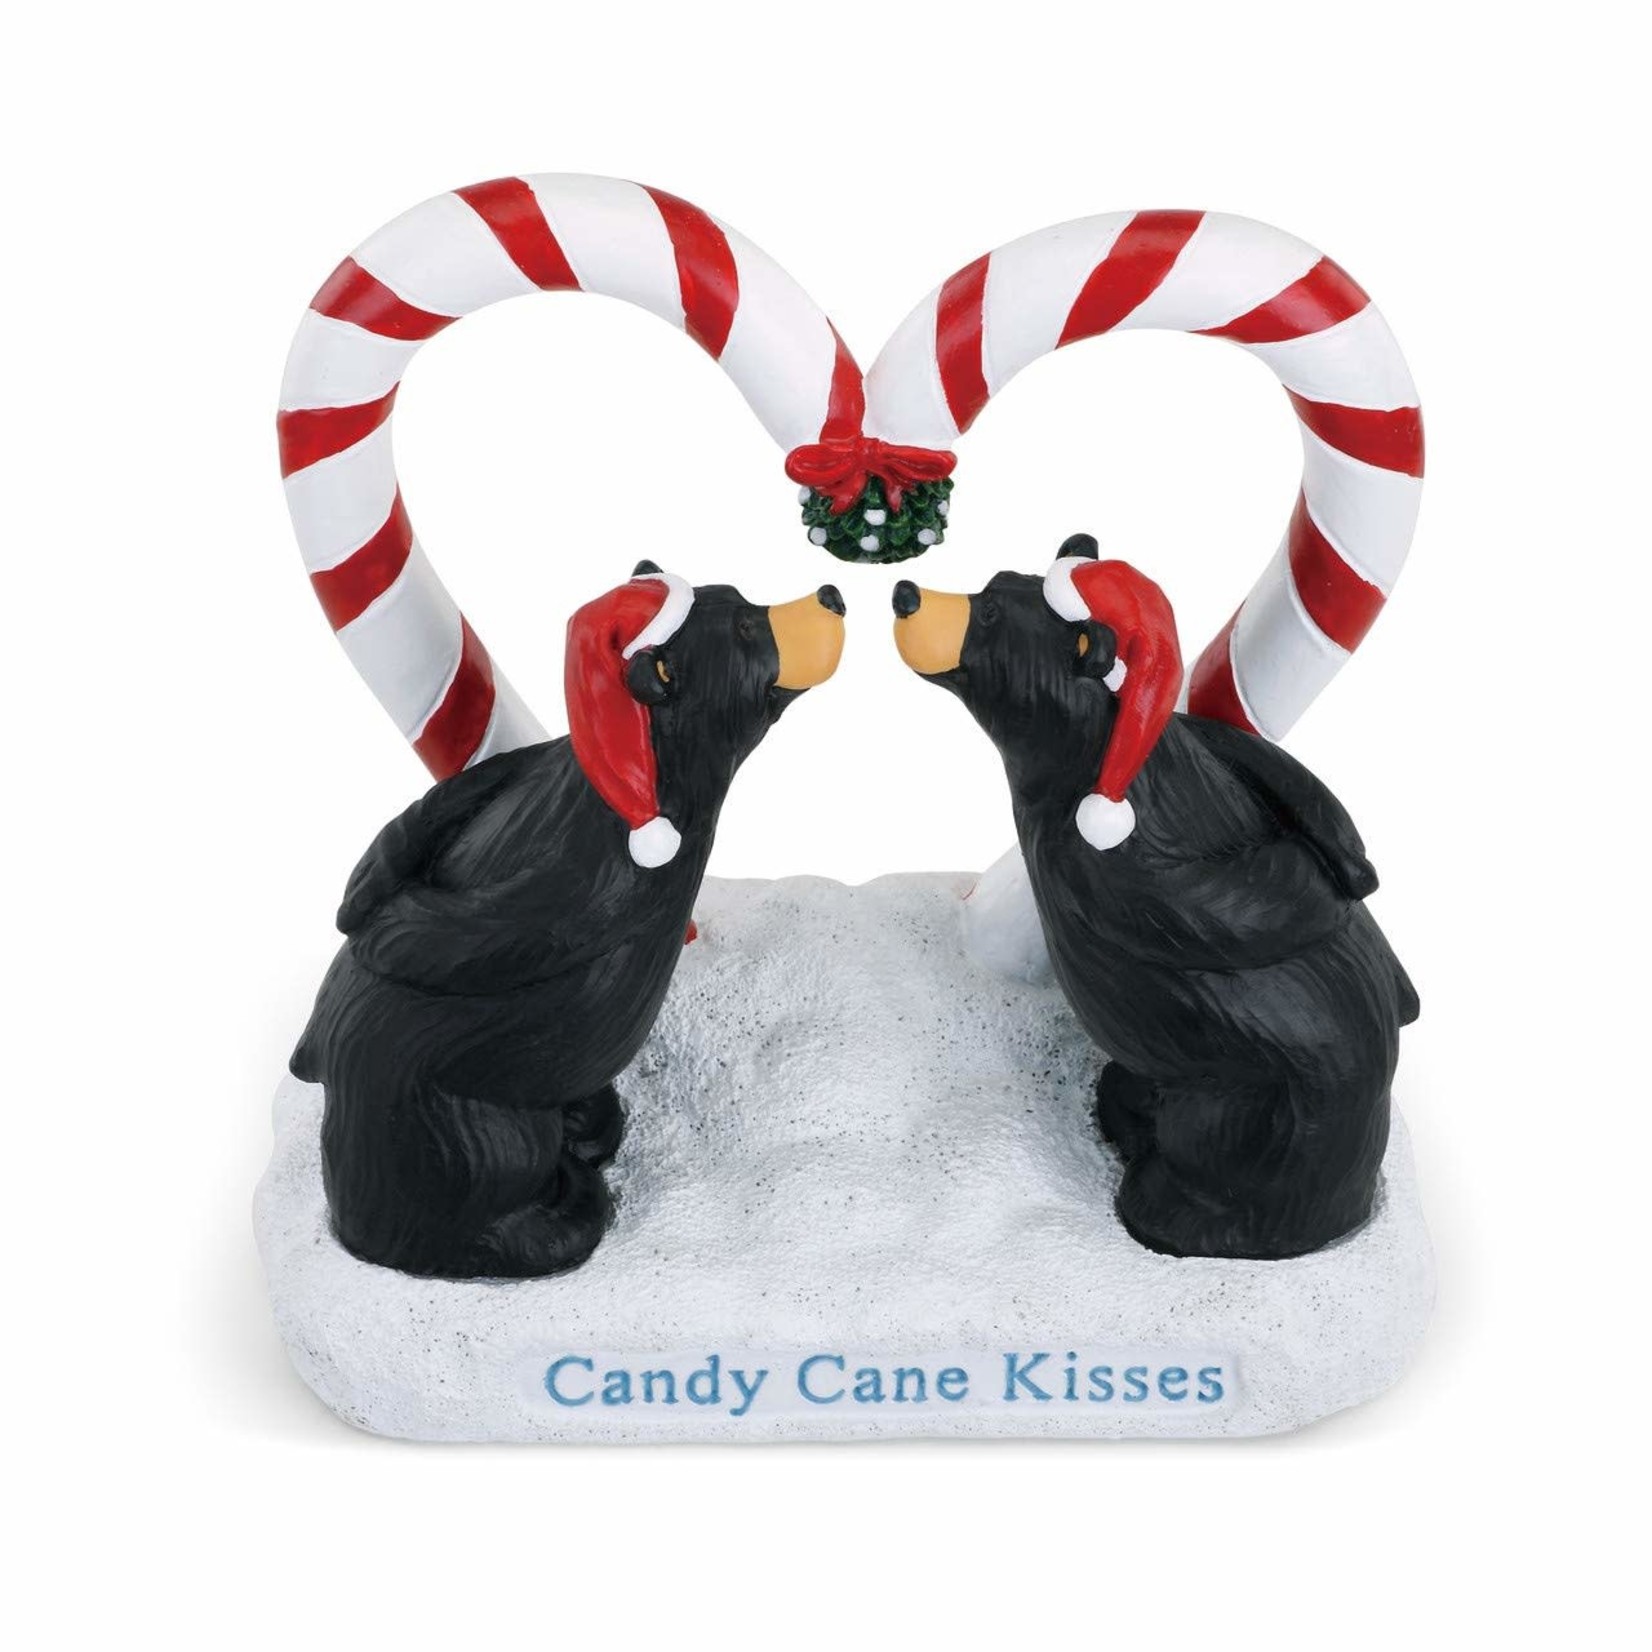 Candy cane kisses figurine